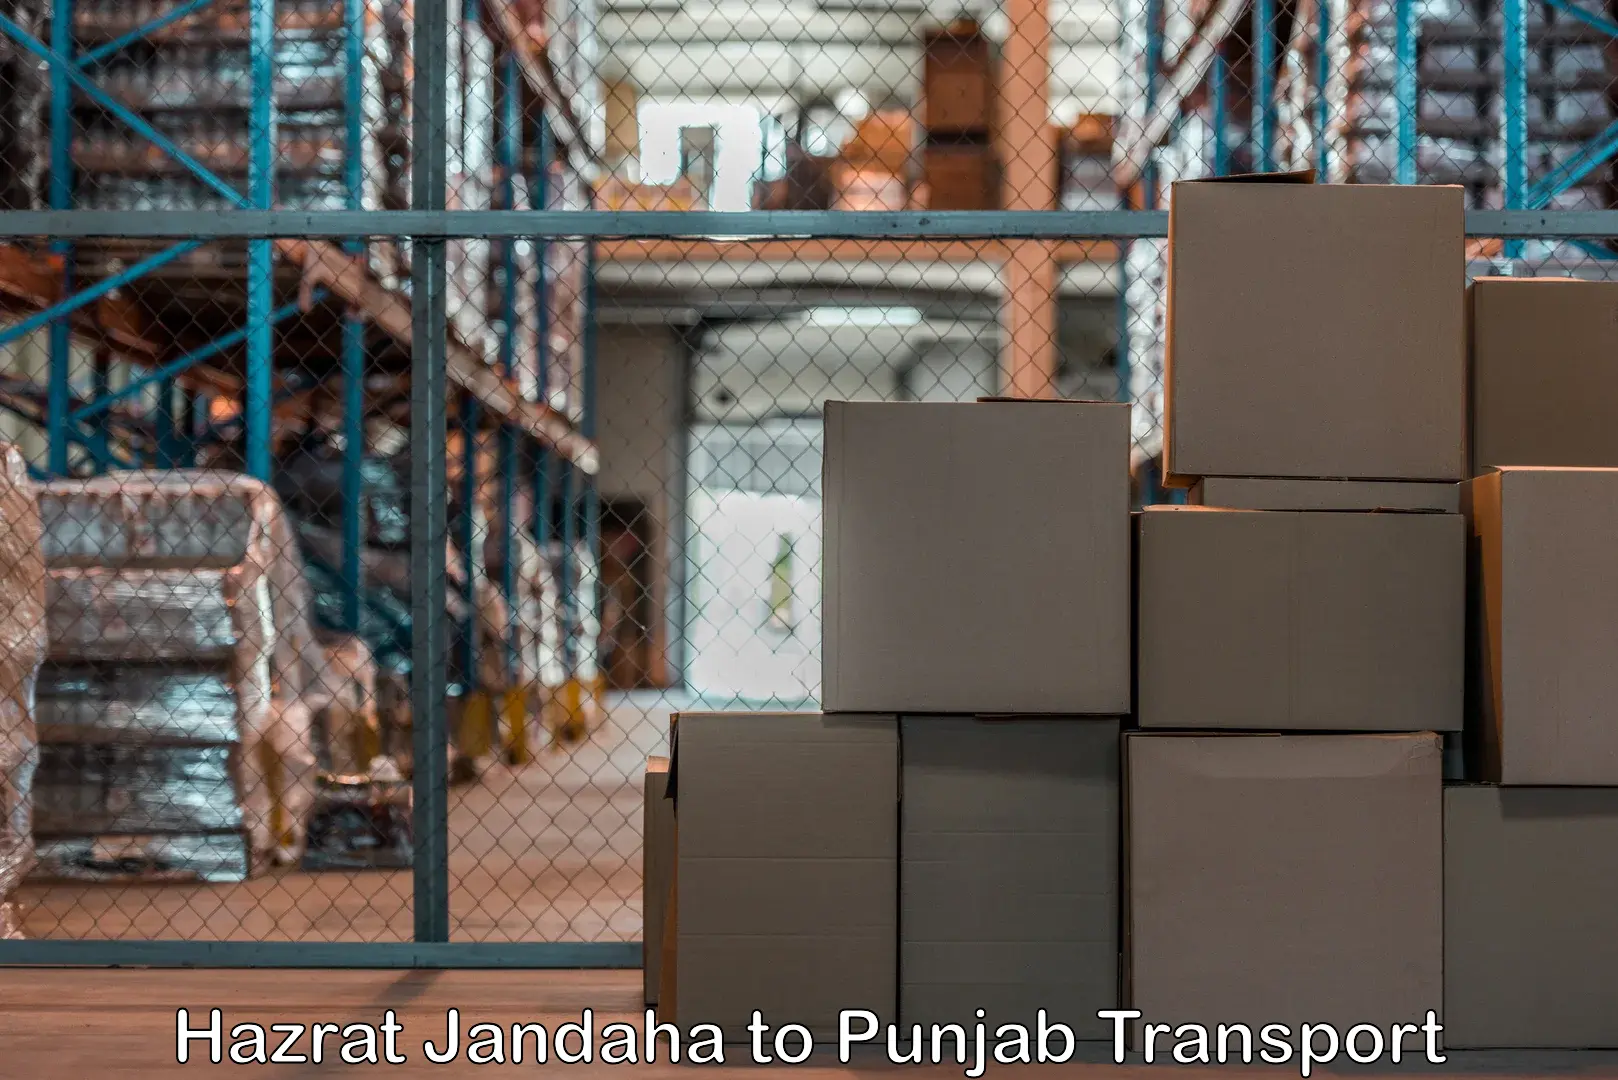 Transport in sharing Hazrat Jandaha to Dhilwan